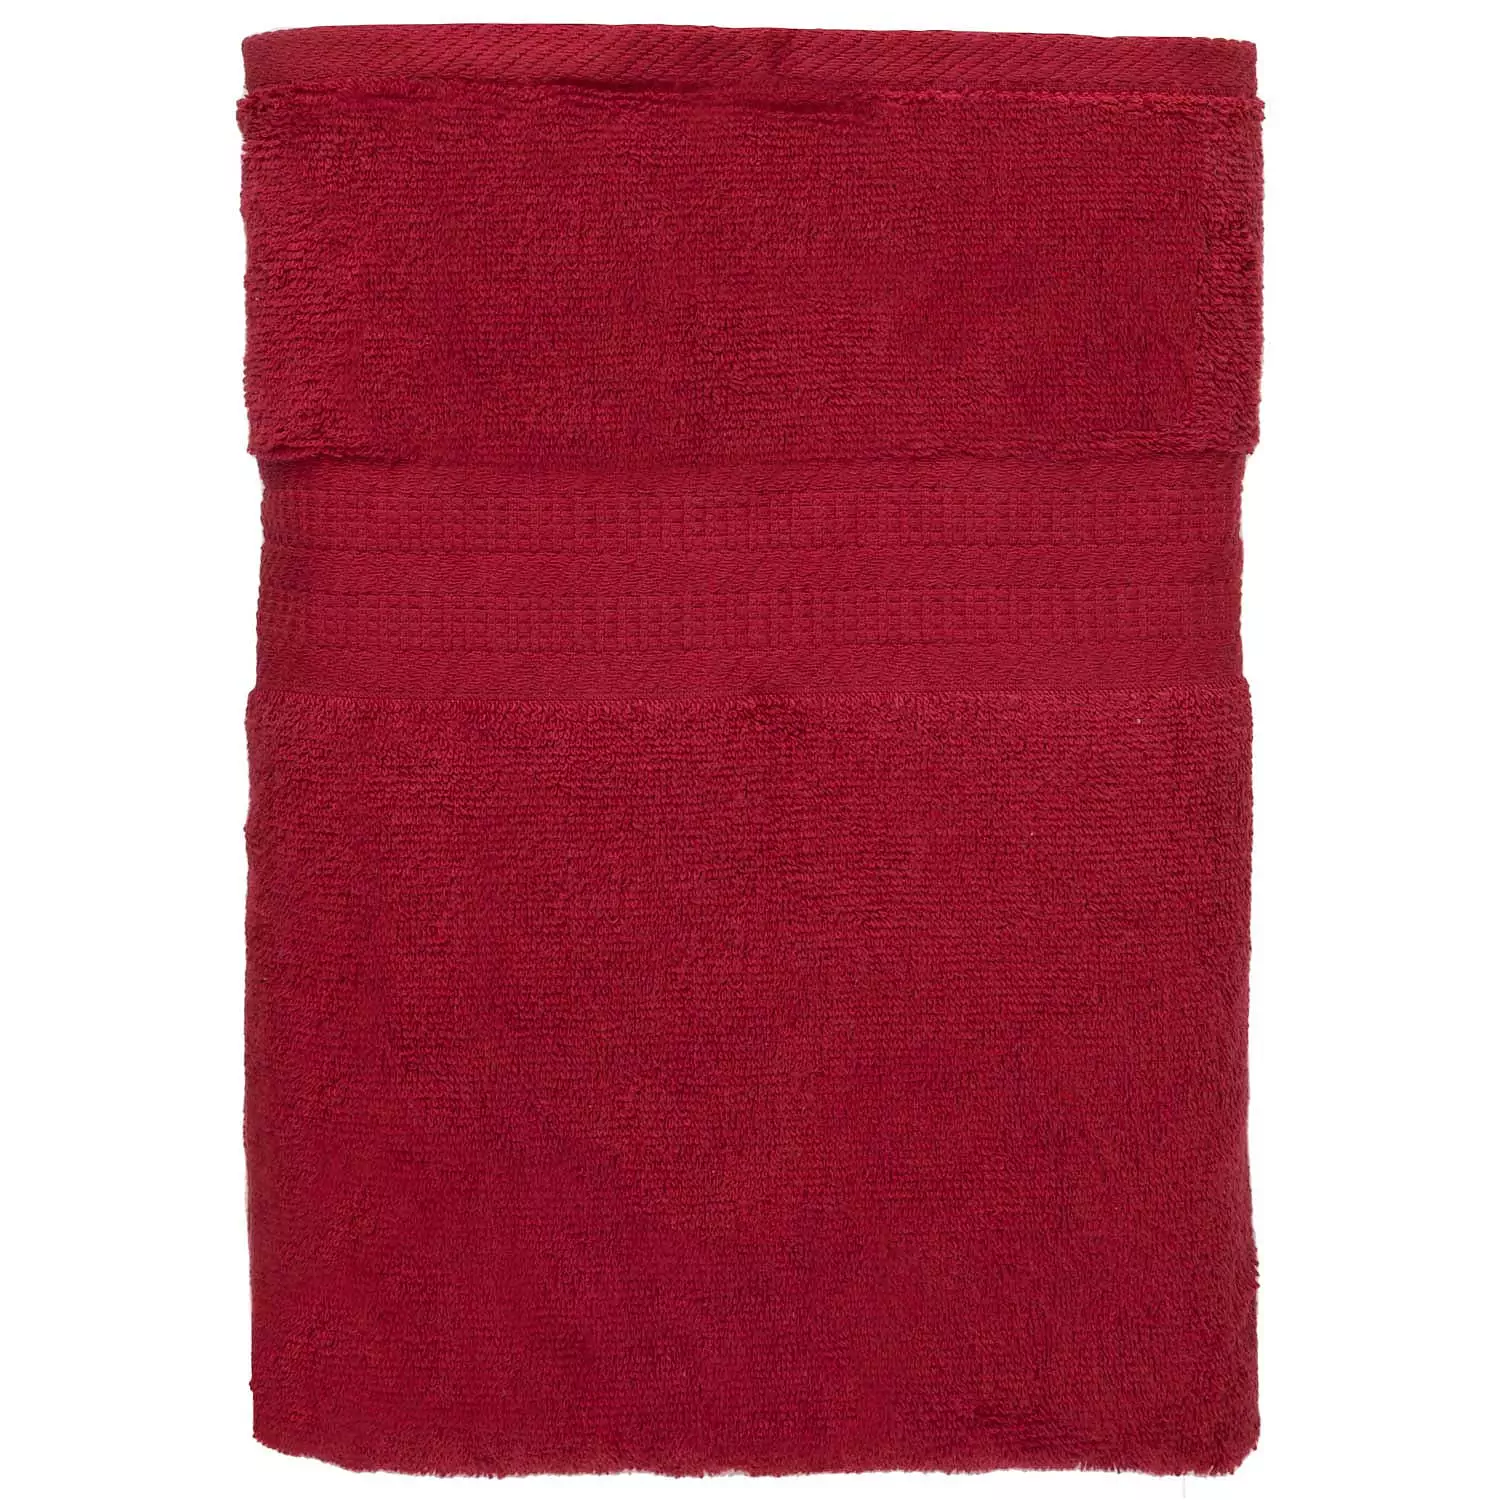 Bath sheet, 30" x 58", red